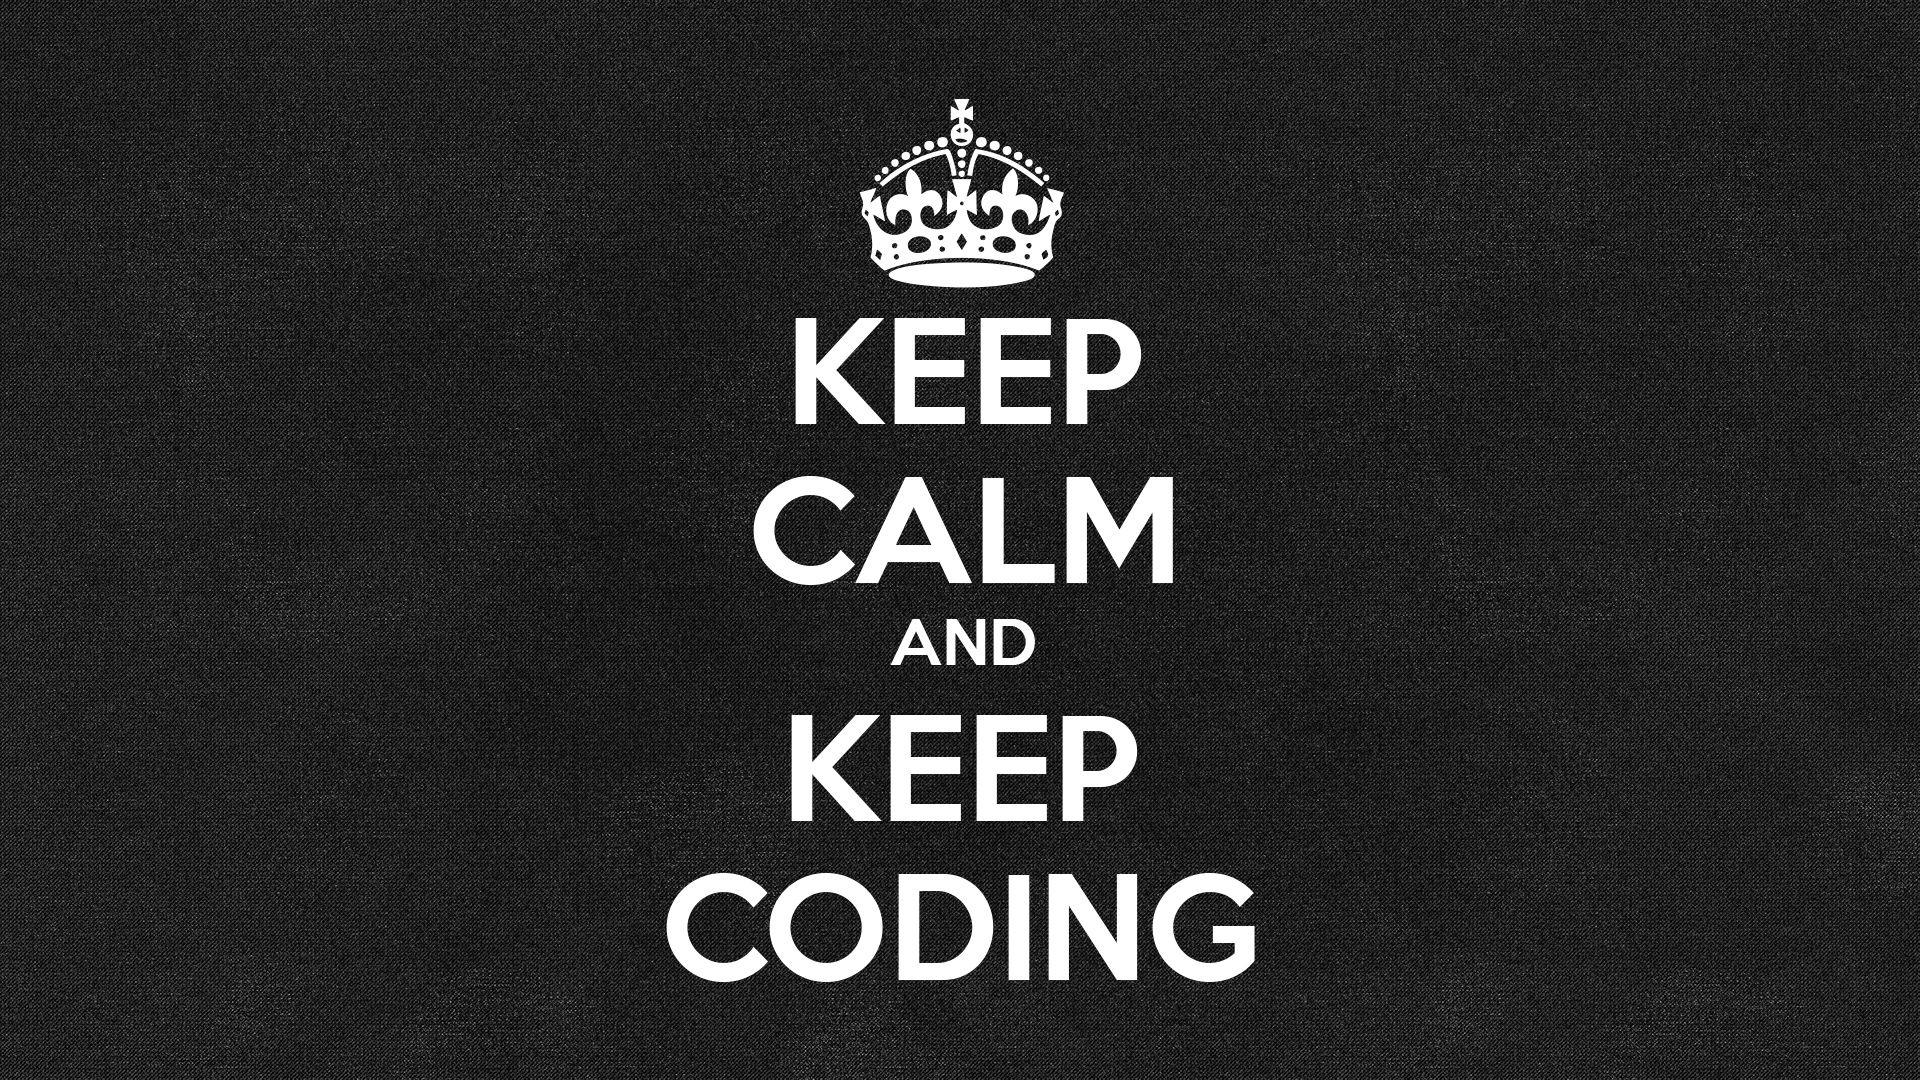 Freebie: “Keep Calm and Keep Coding” wallpaper